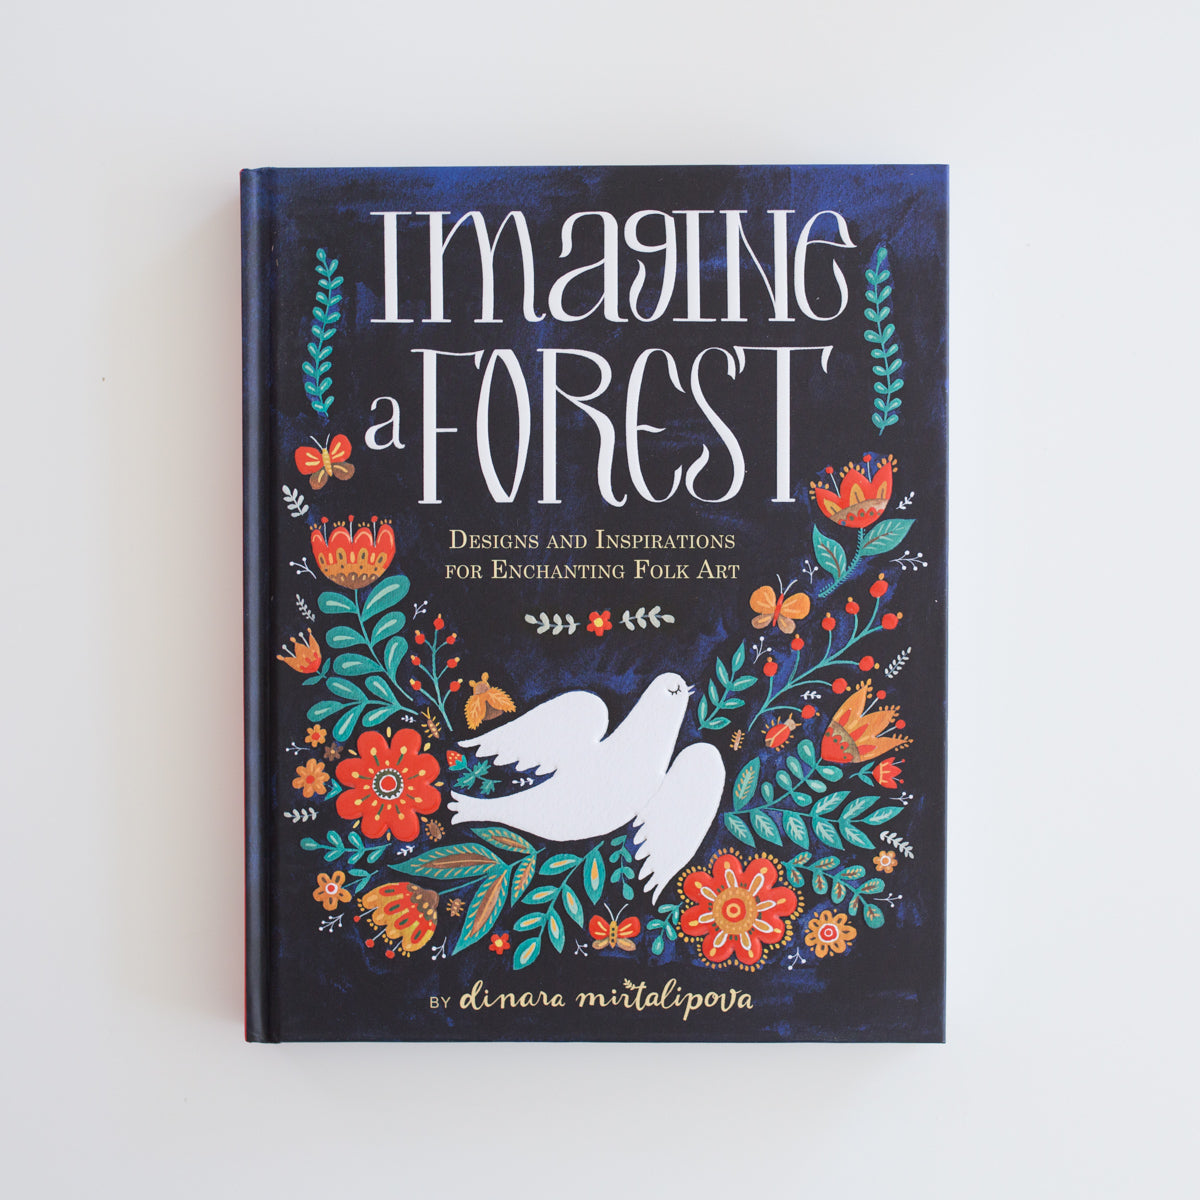 Imagine a Forest' by Dinara Mirtalipova